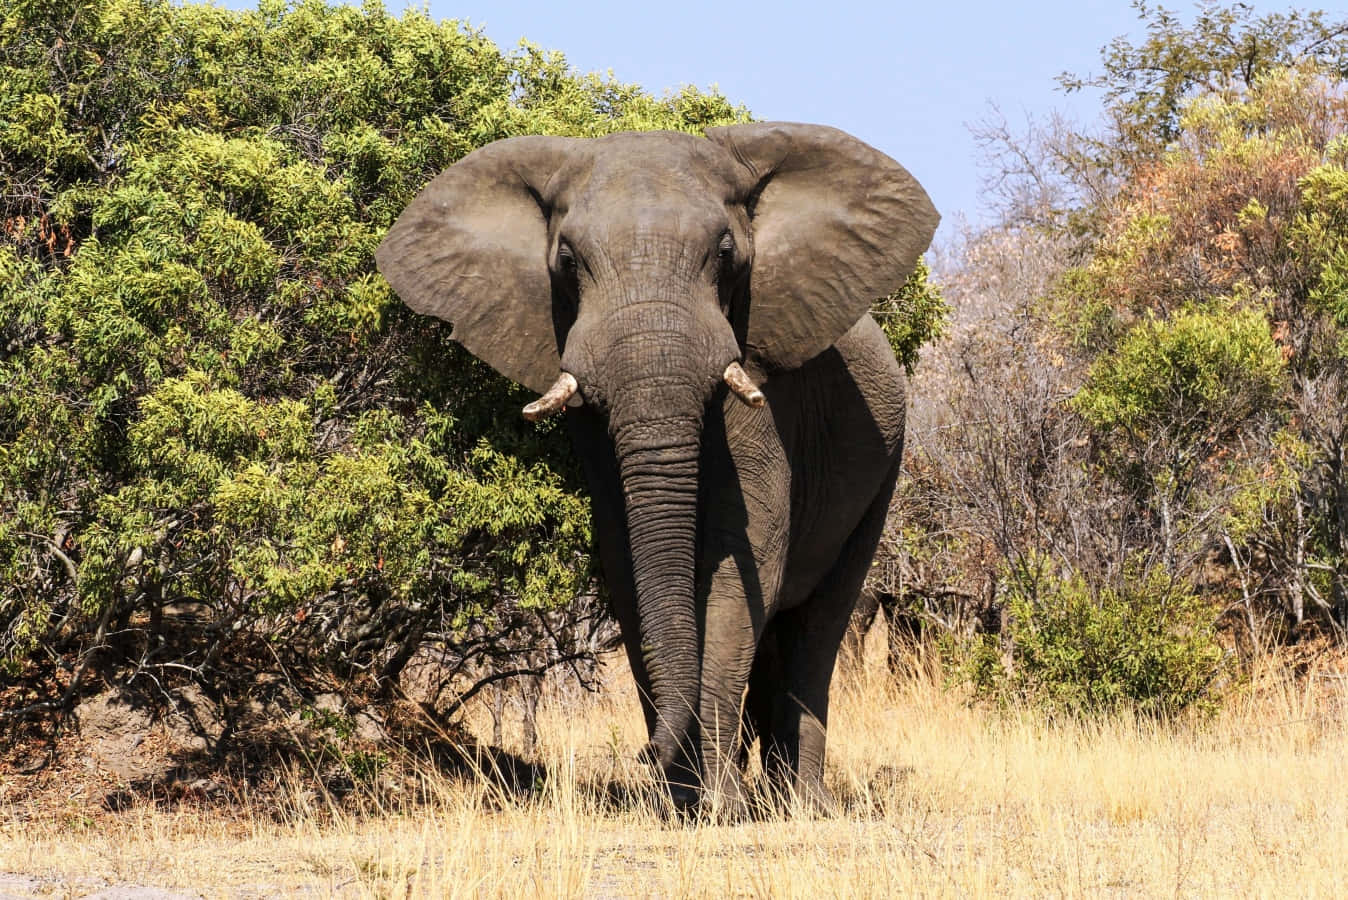 A Large Elephant Walking Through A Field